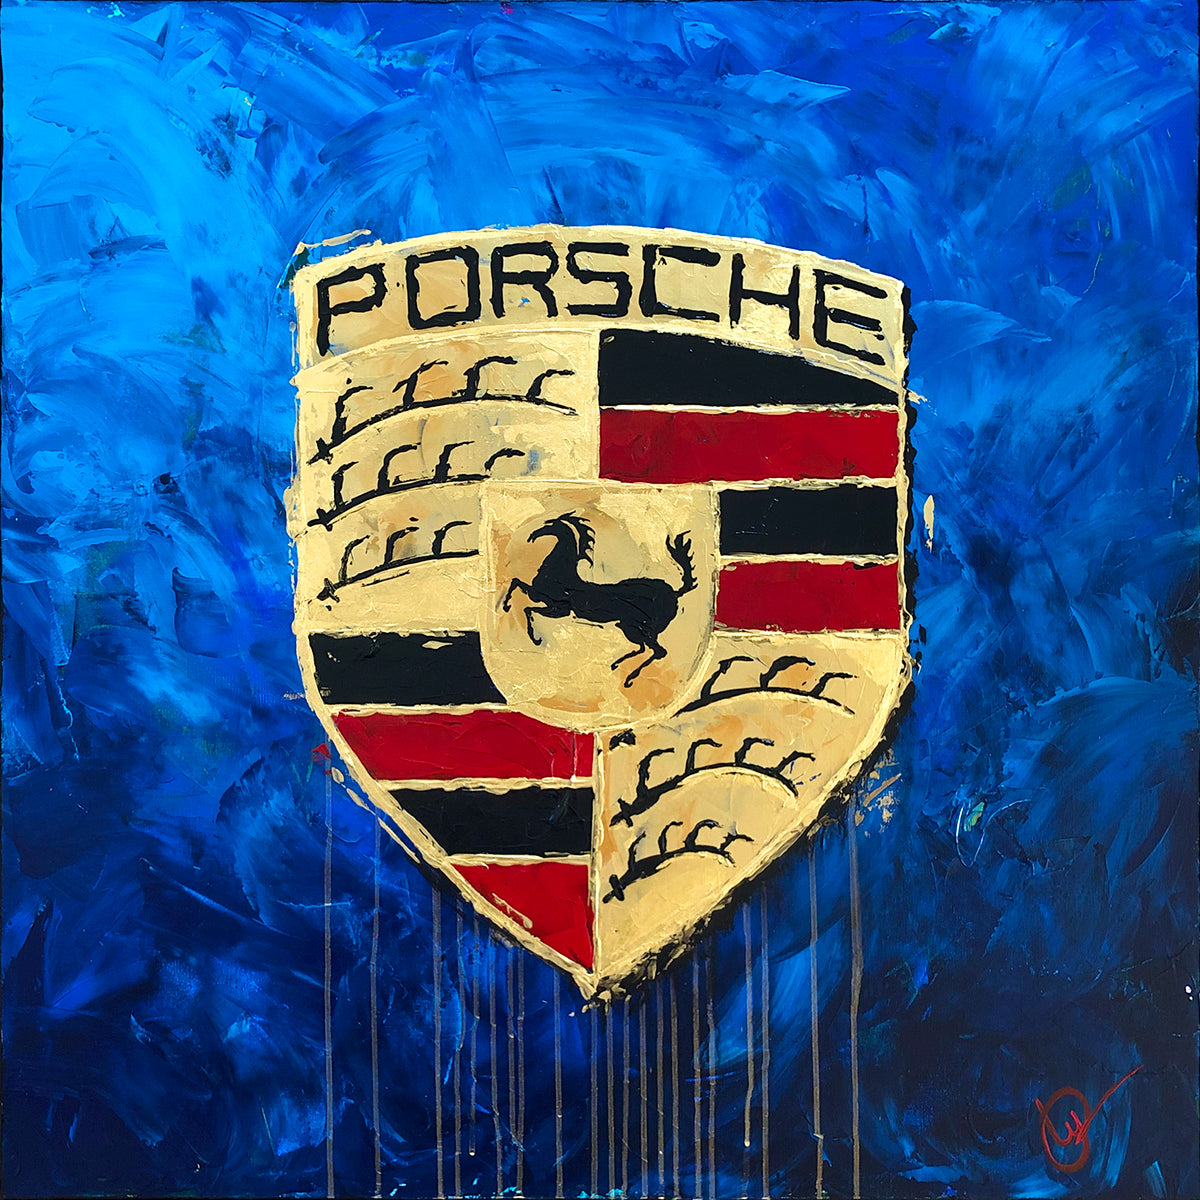 Porsche Emblem 40 - Blue "SPECIAL EDITION" - Giclée